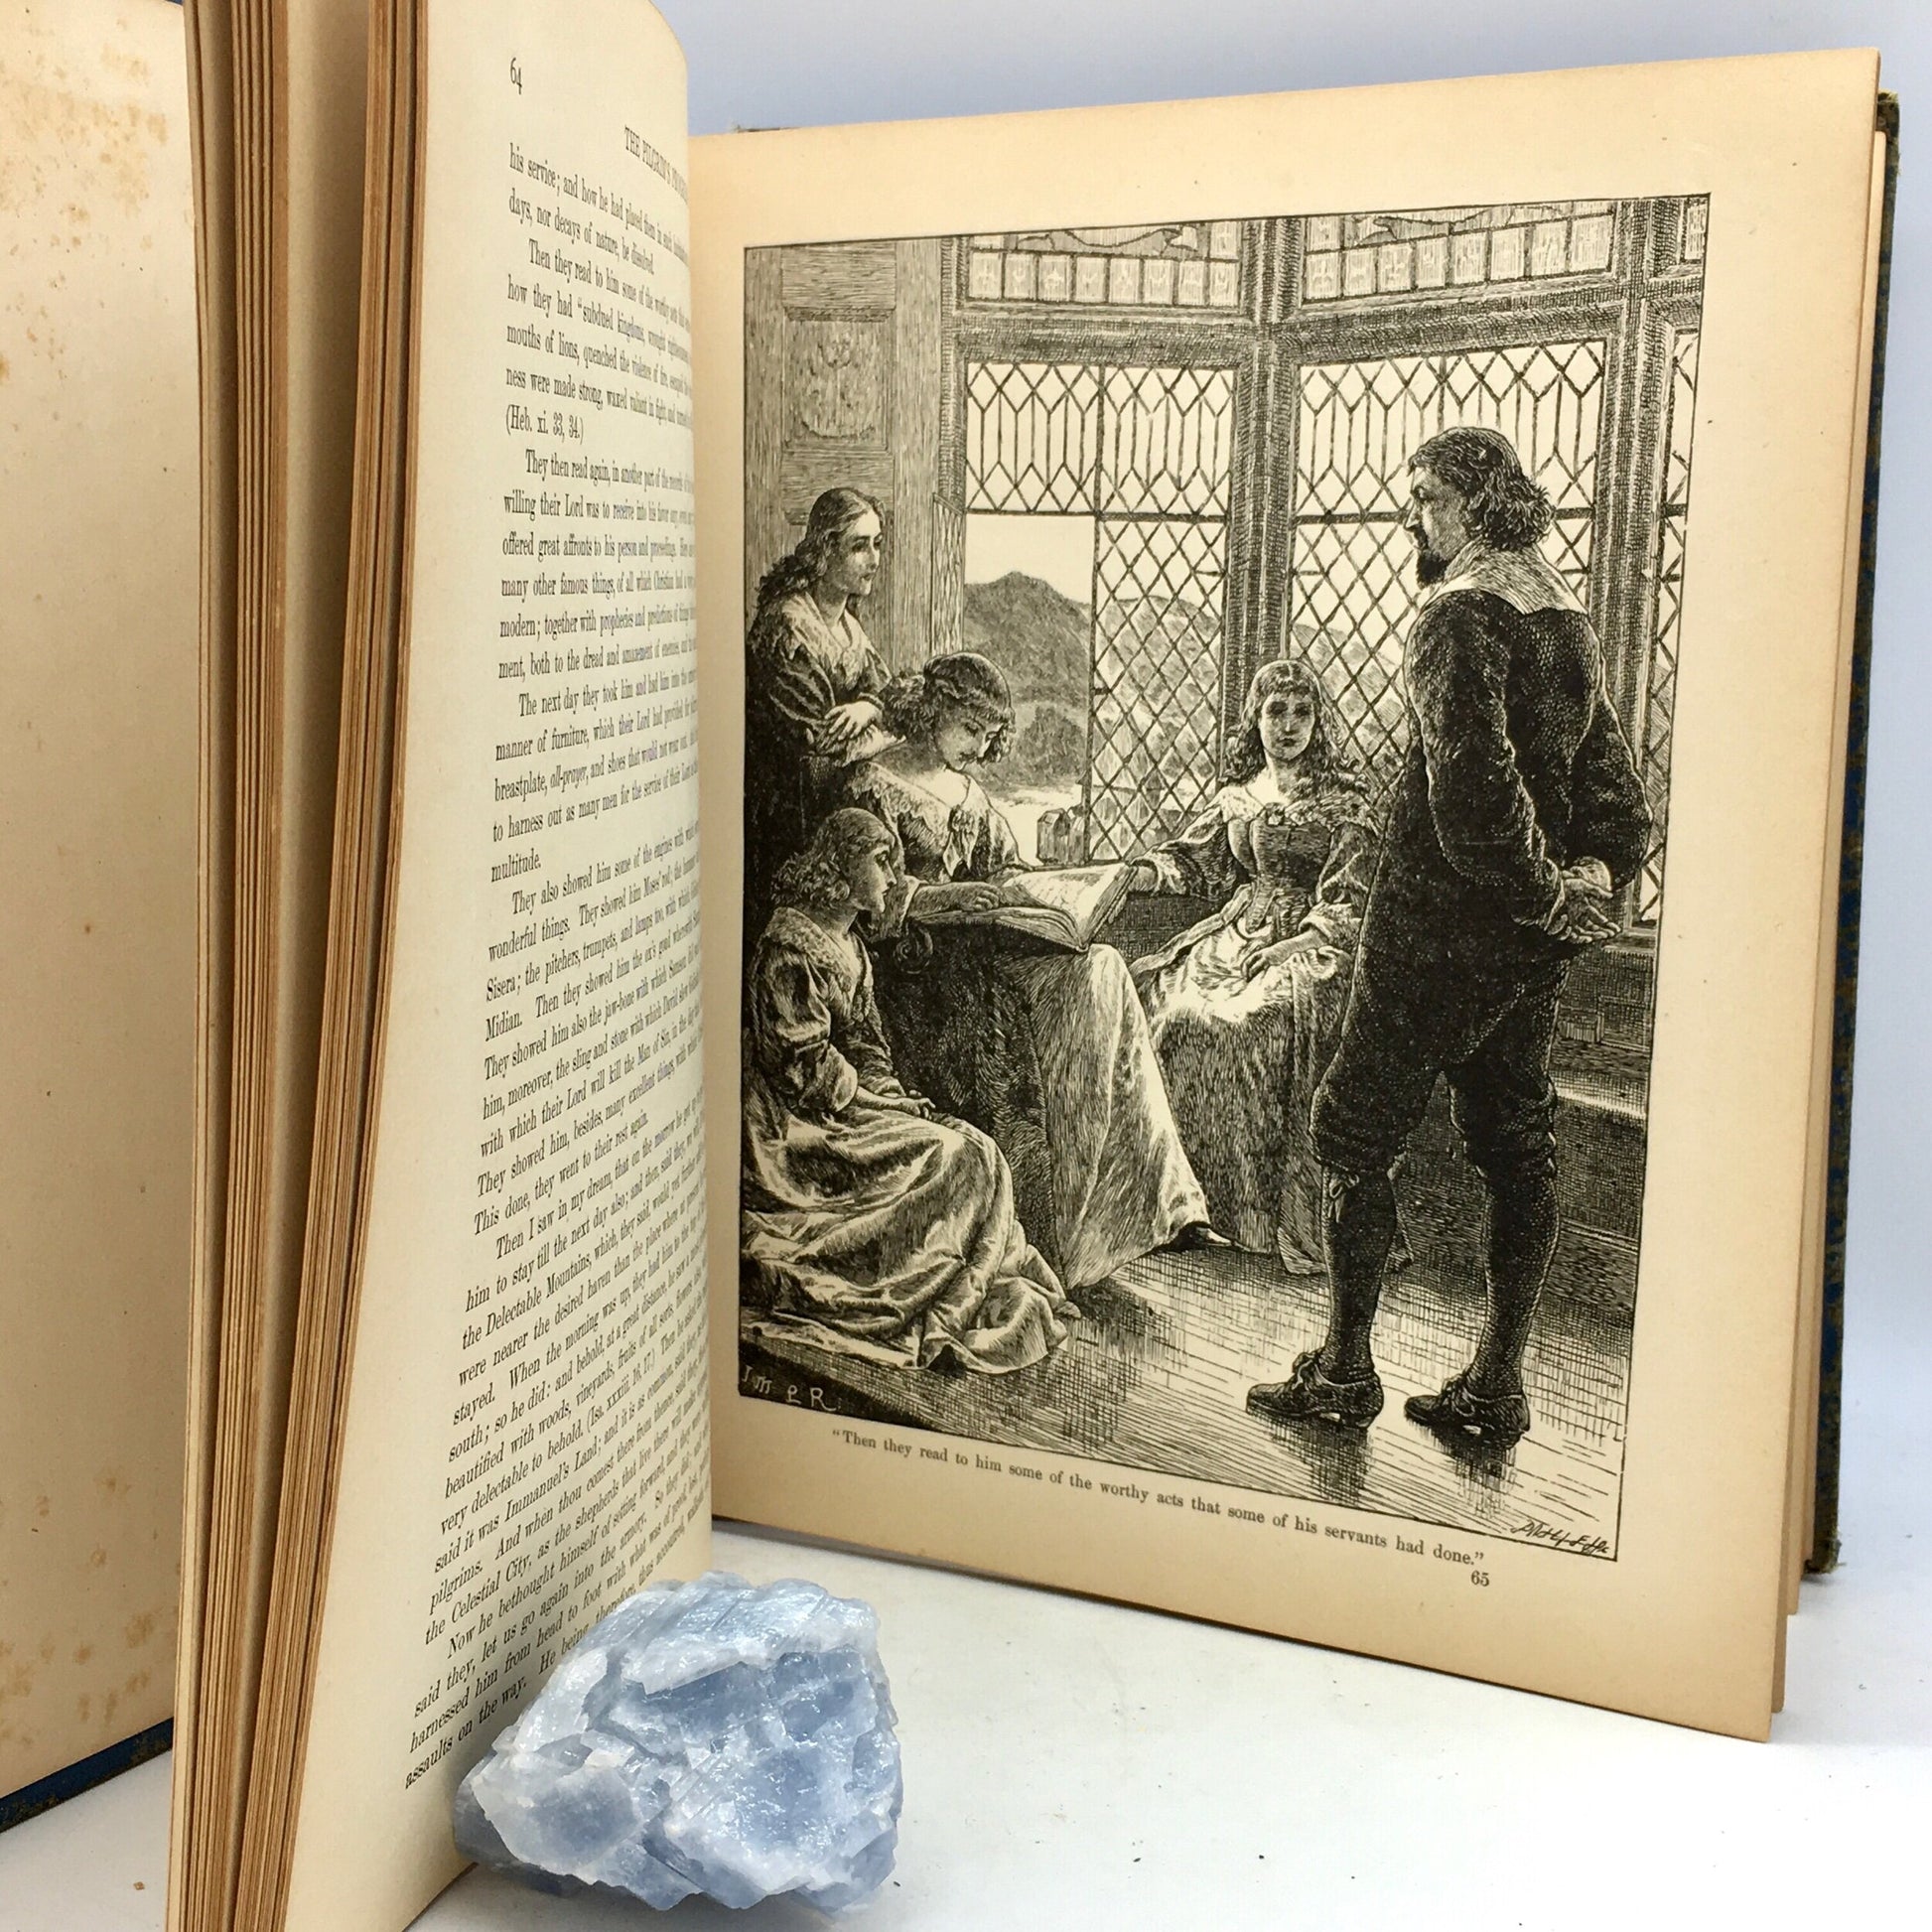 BUNYAN, John “The Pilgrim’s Progress” [Henry Altemus, 1891] - Buzz Bookstore